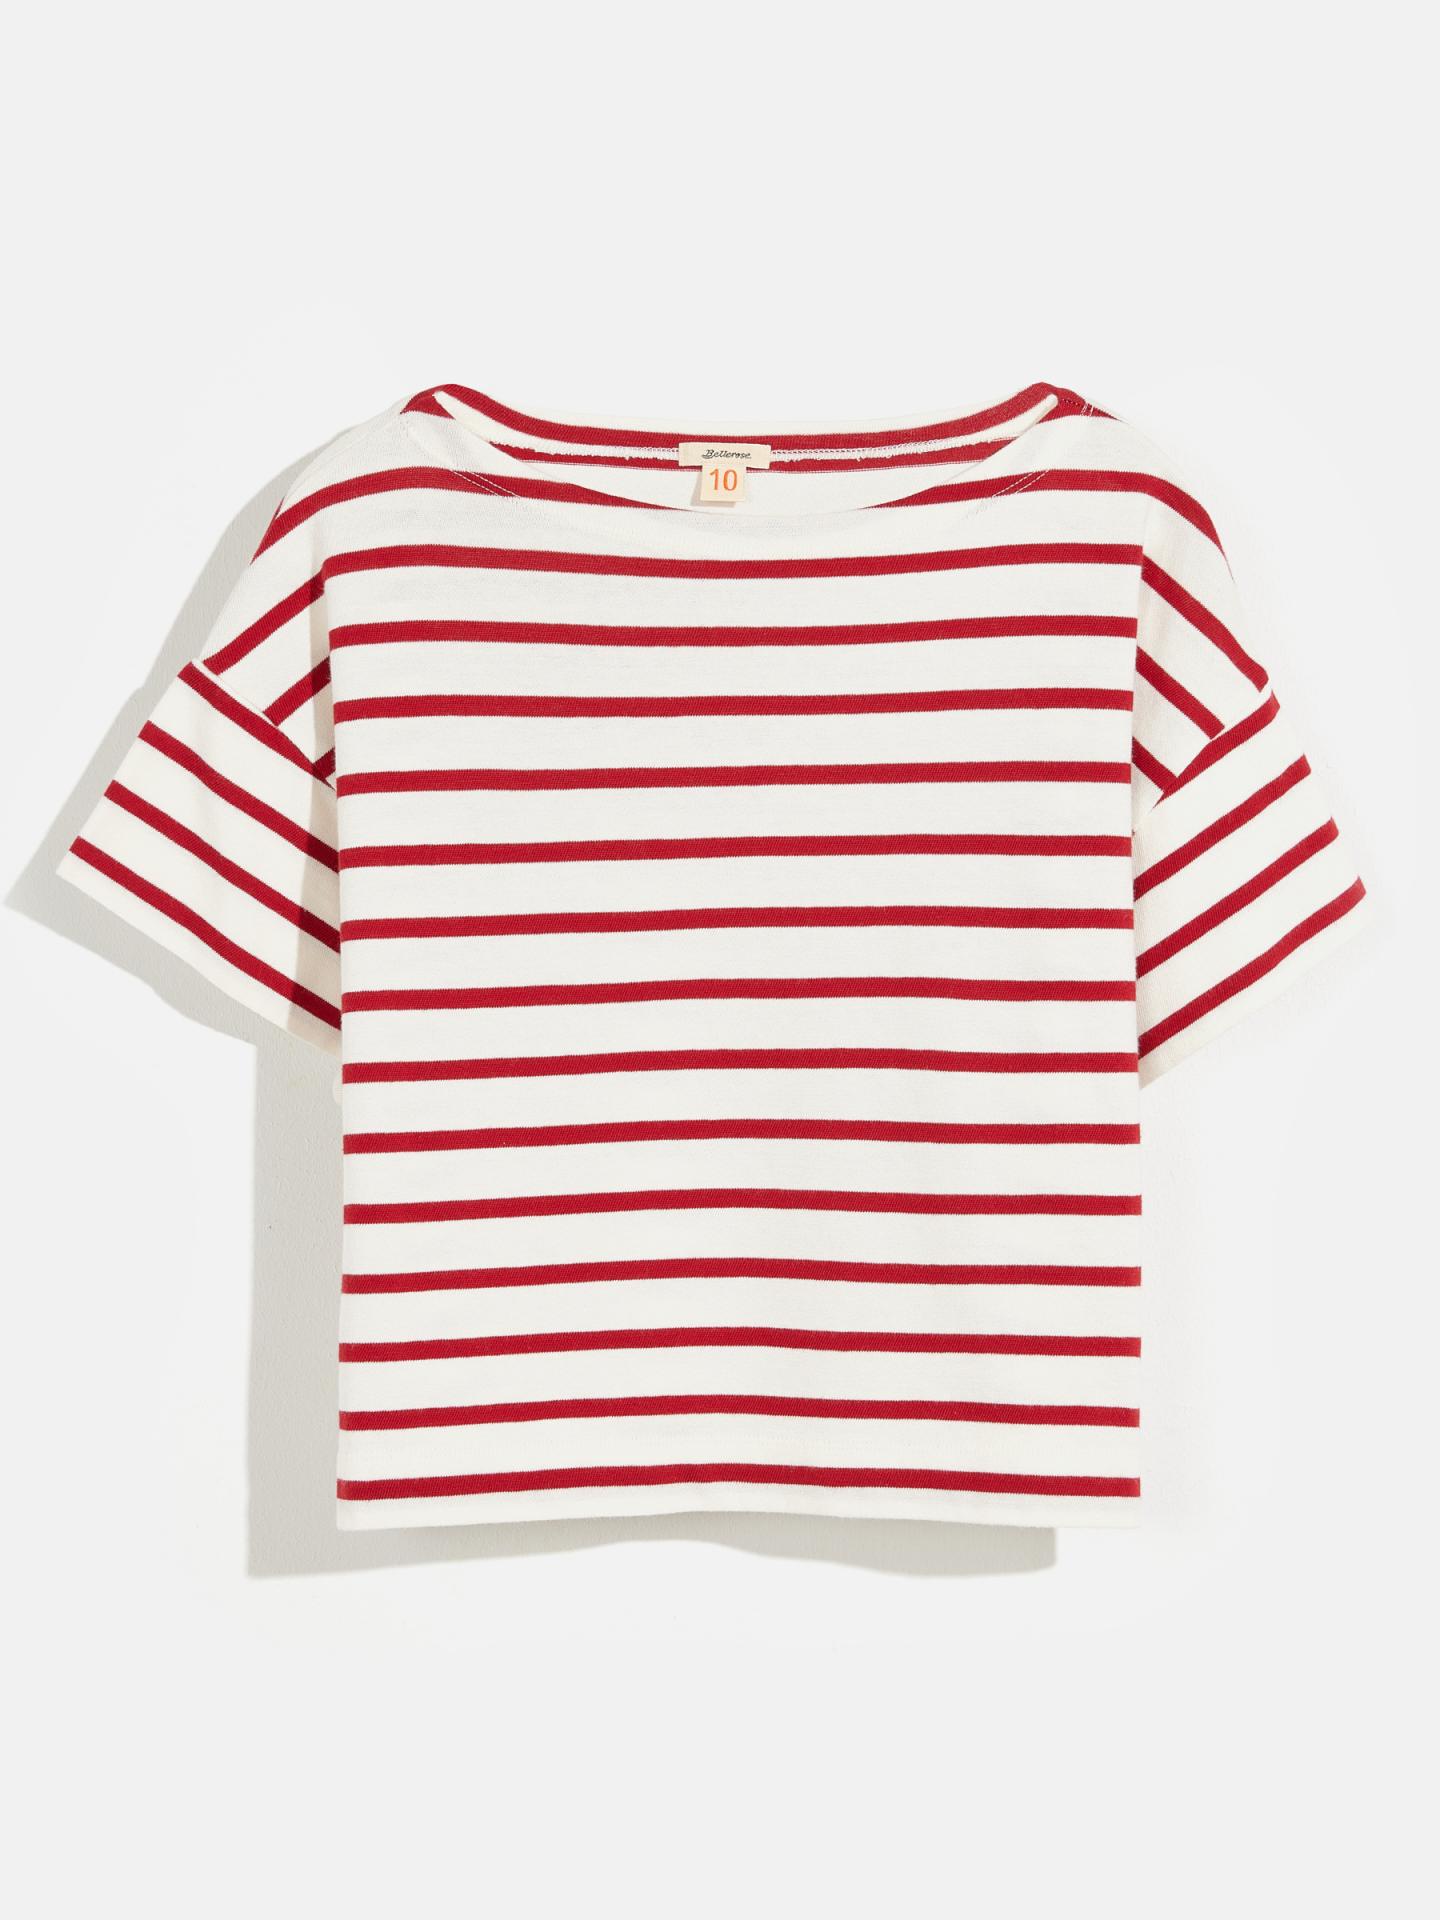 Bellerose,VASSY41,Camiseta rayas roja